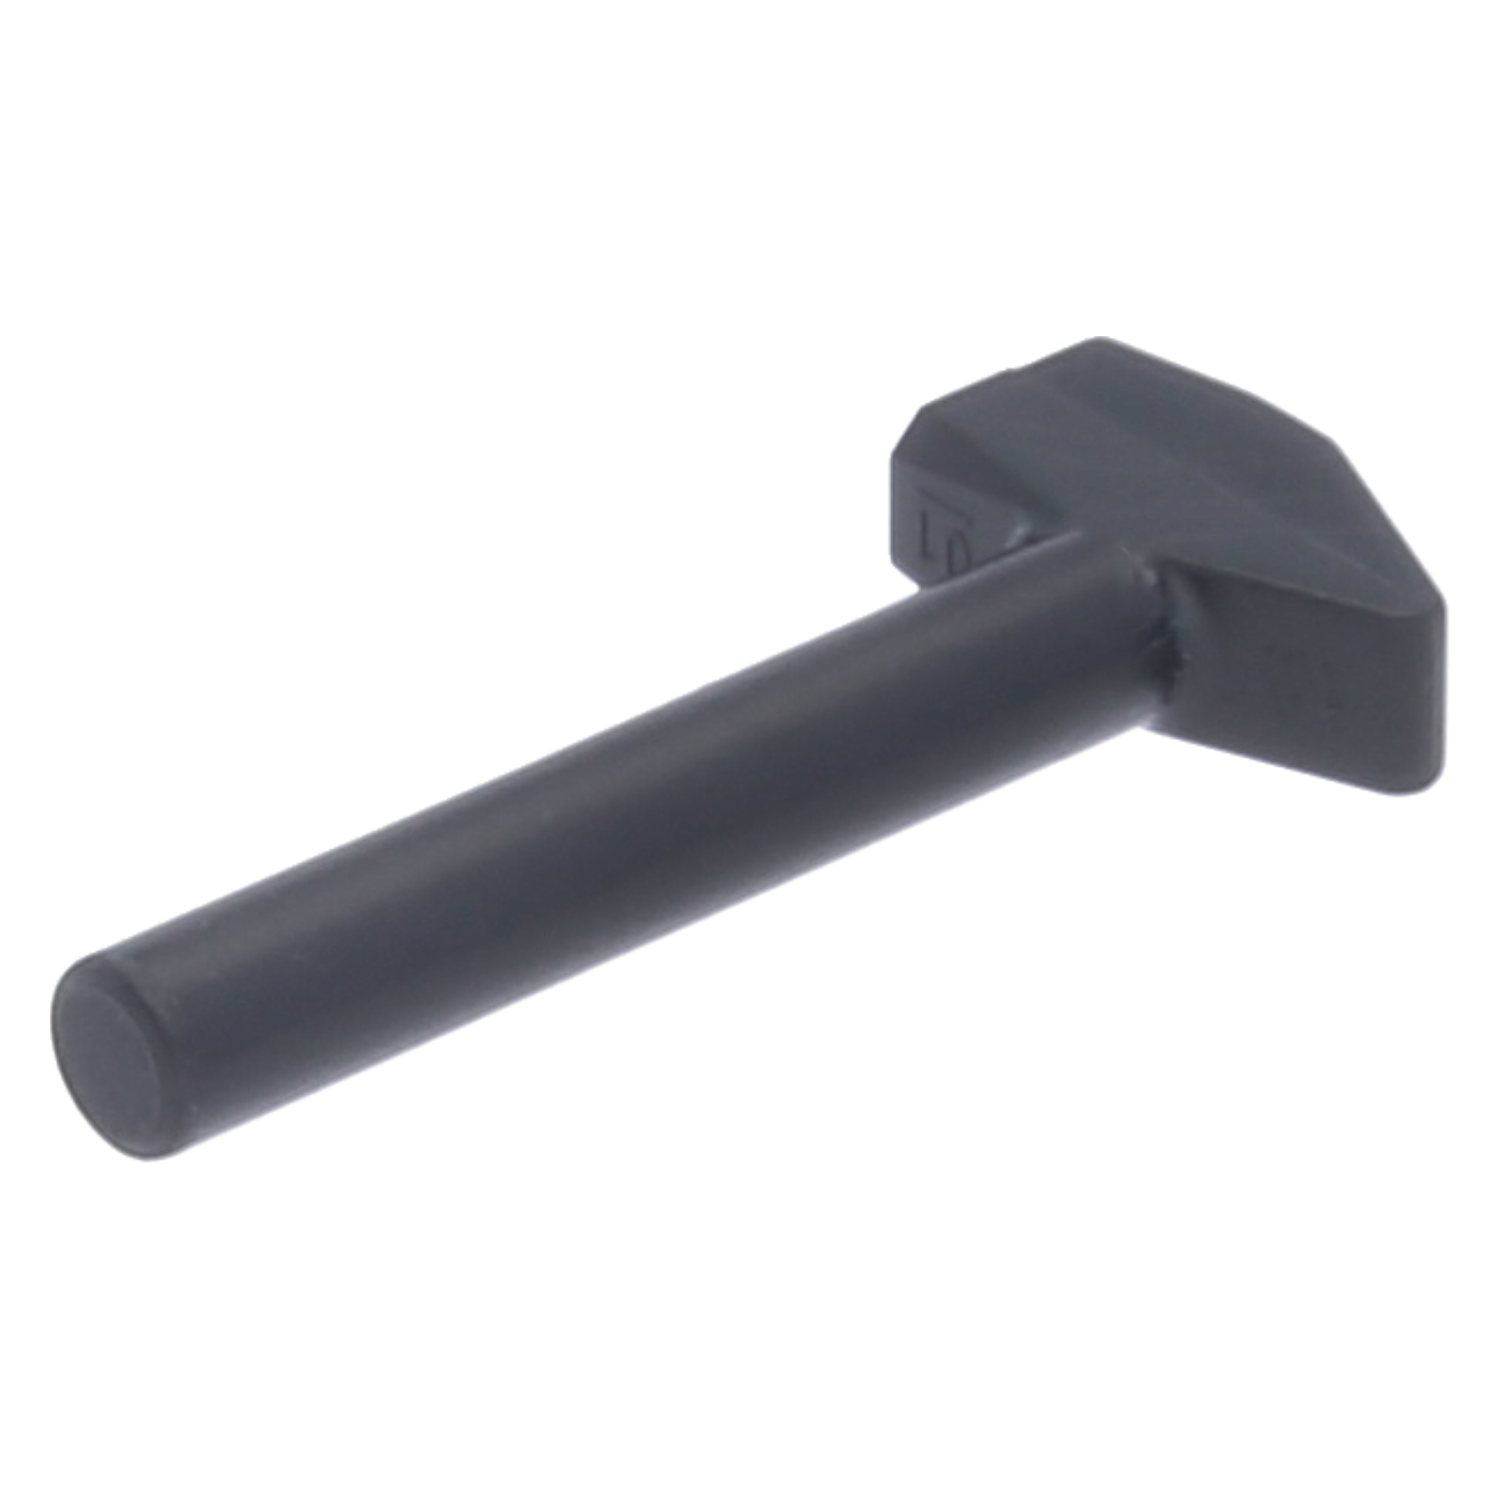 LEGO Minifigure Accessory (Tools) - Hammer (Black)